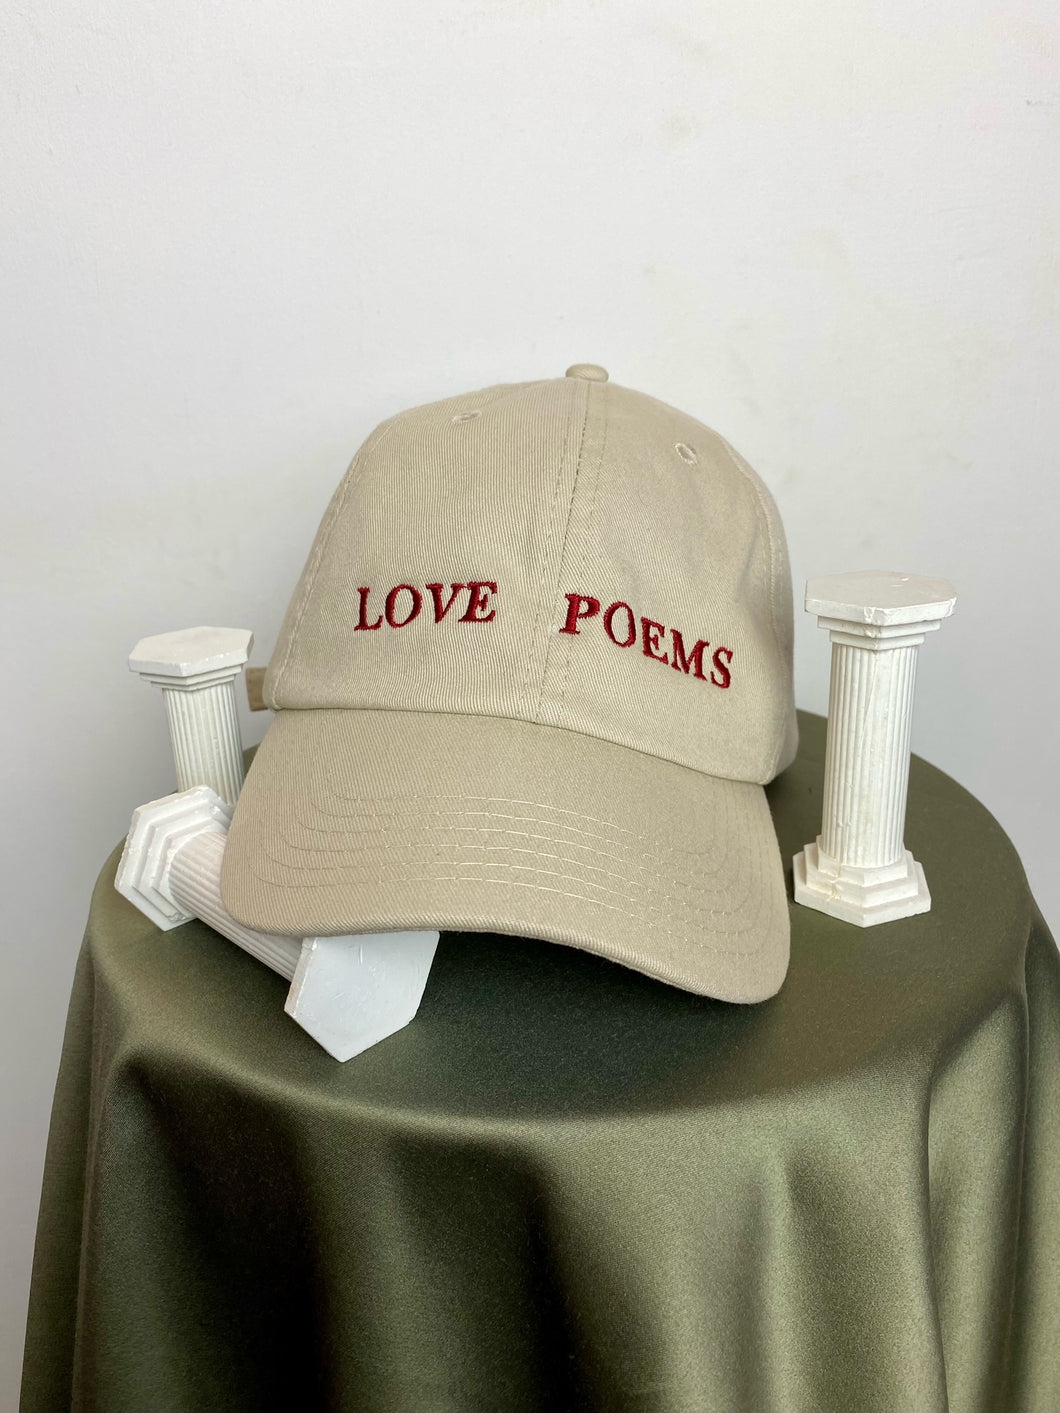 Love Poems cap